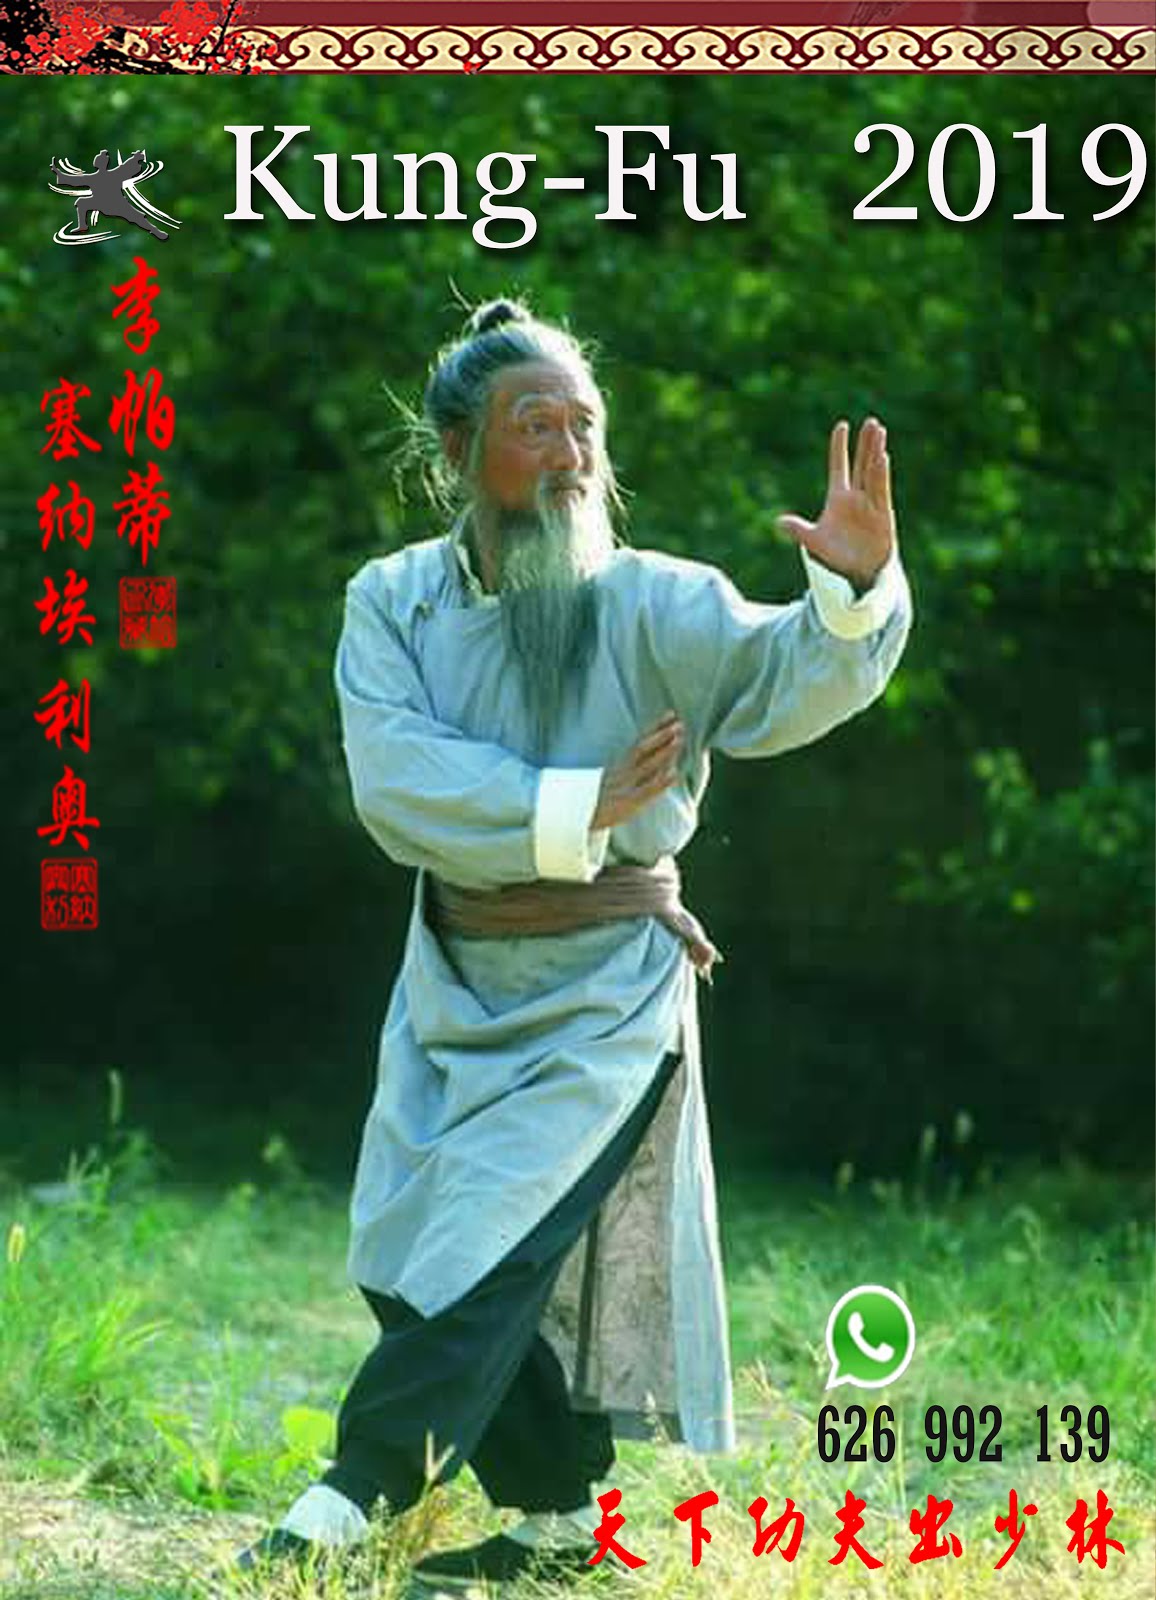 Clases de Kung Fu en Azuqueca de Henares.